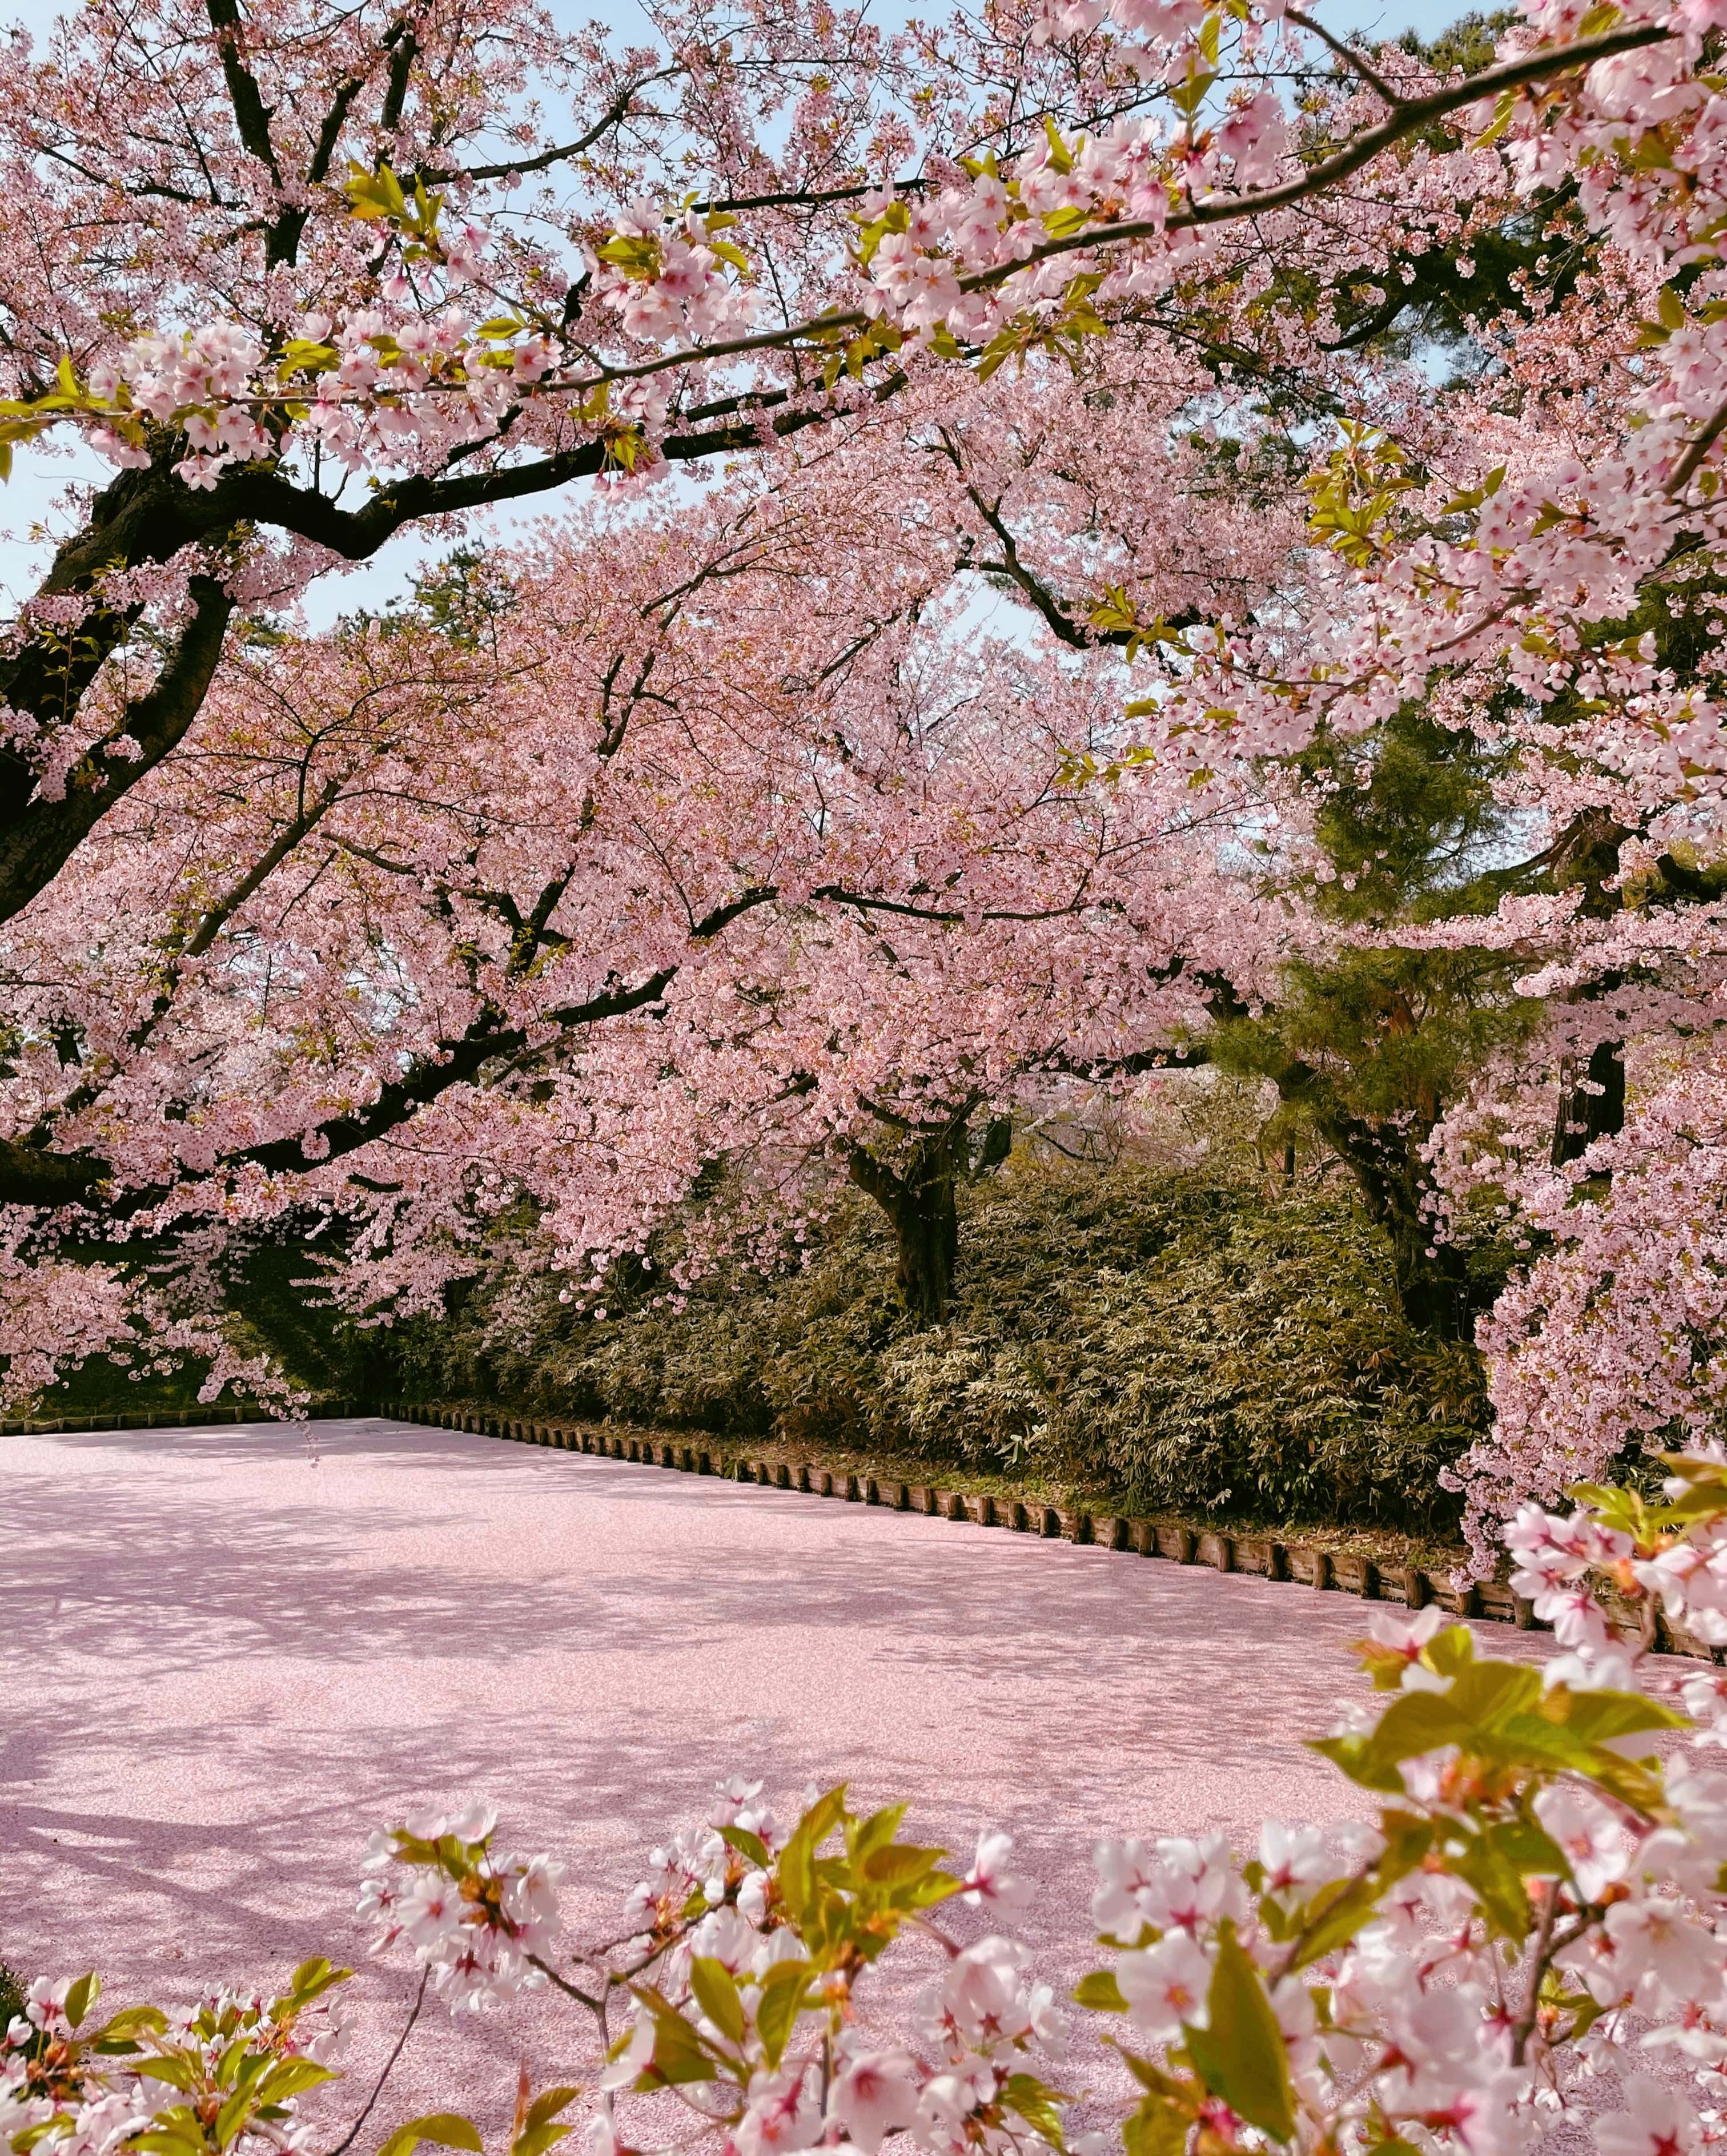 cherry blossom overload!